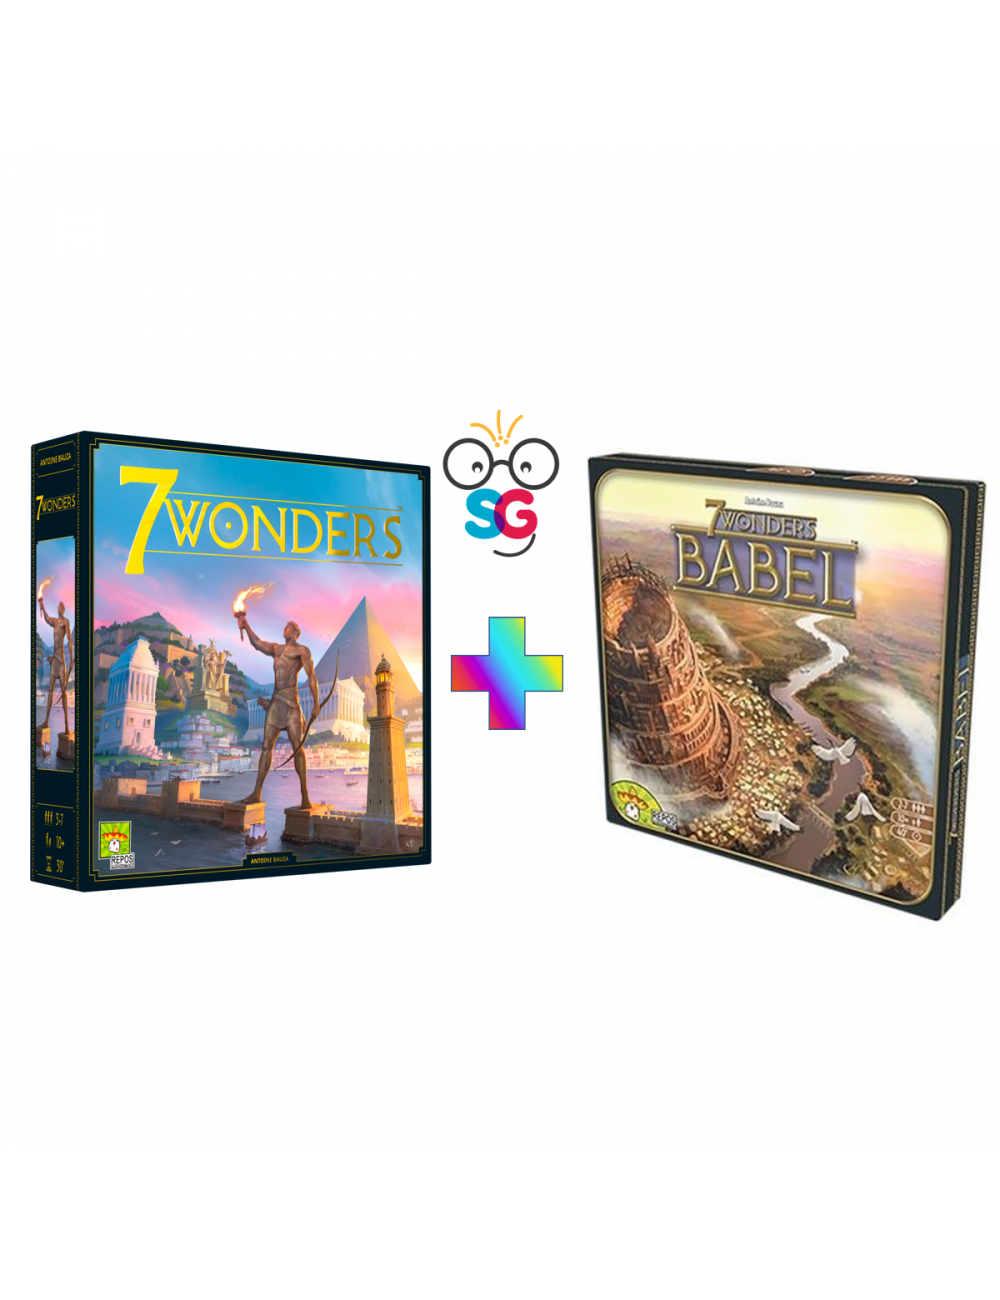 Combo 7 Wonders Nueva Edición + 7 Wonders: Babel COMWON924129  Days Of Wonder